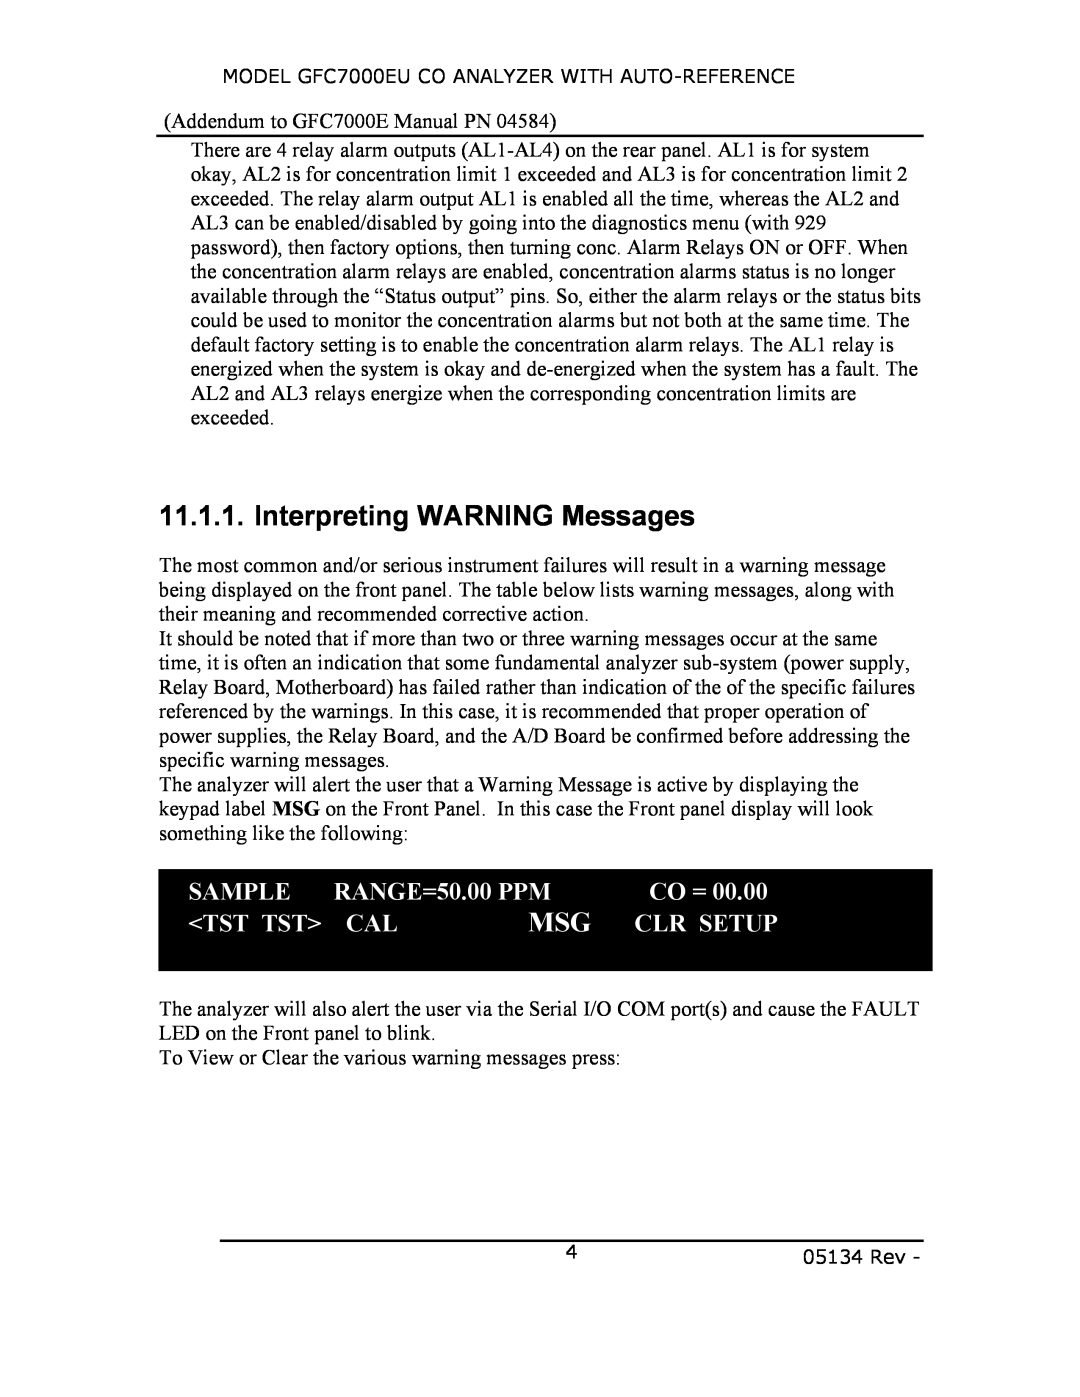 Teledyne GFC7000EU manual Interpreting WARNING Messages, Sample, RANGE=50.00 PPM, Co =, Tst Tst, Clr Setup 